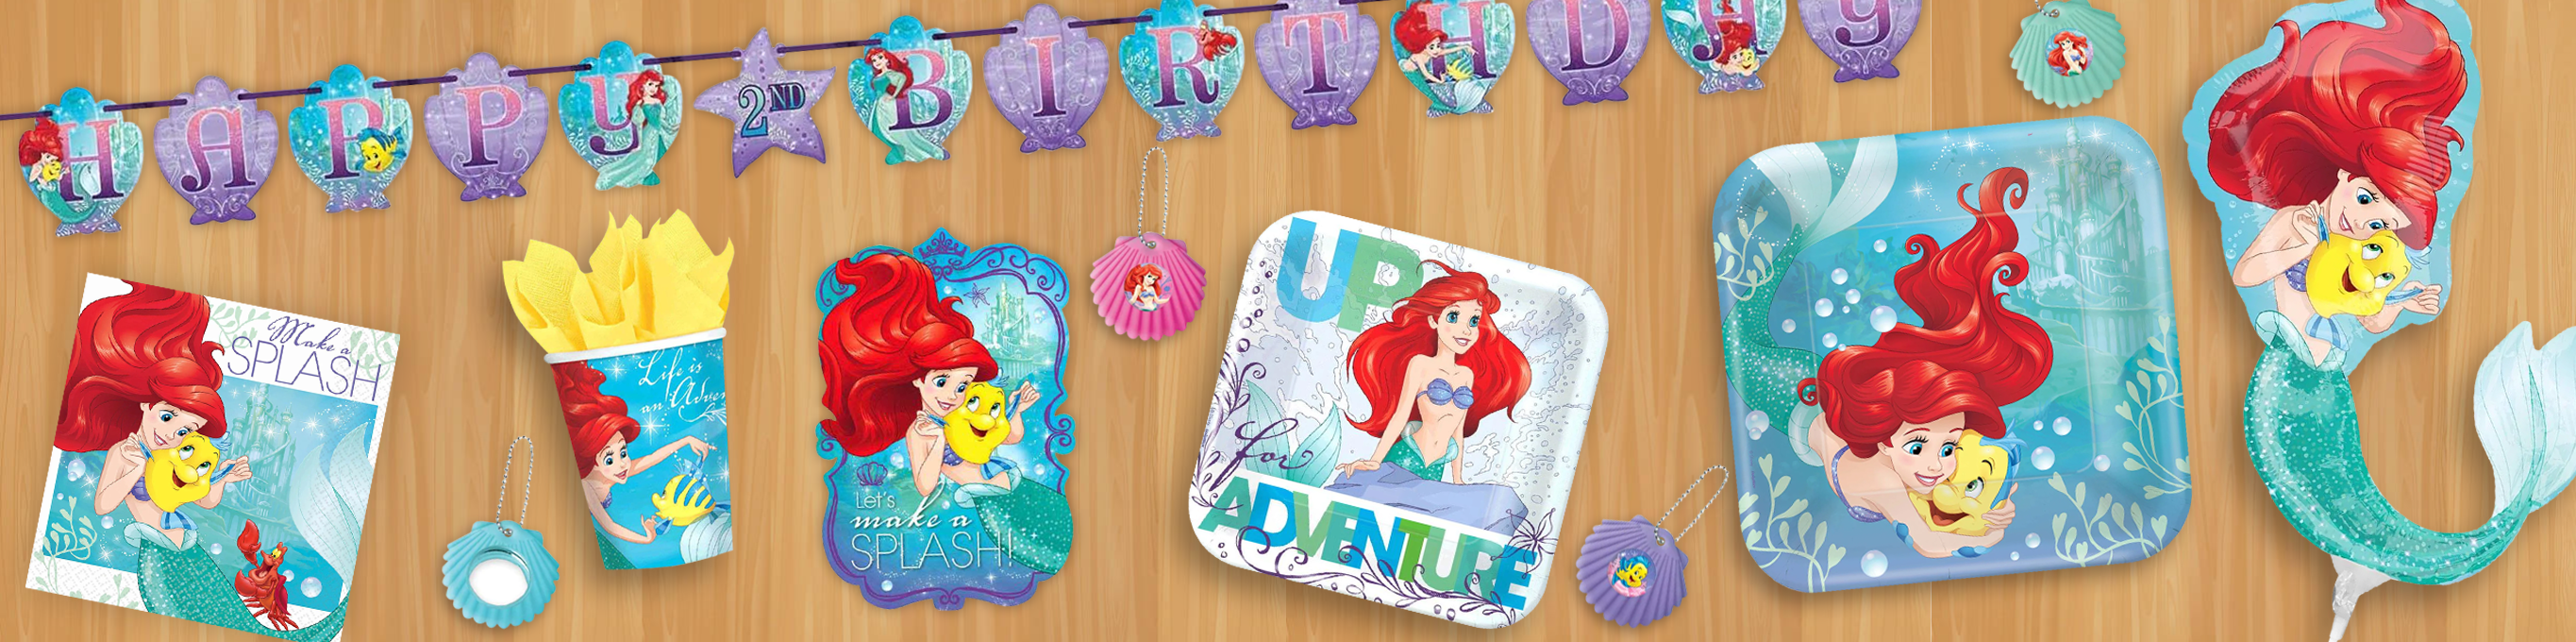 Little Mermaid party ideas